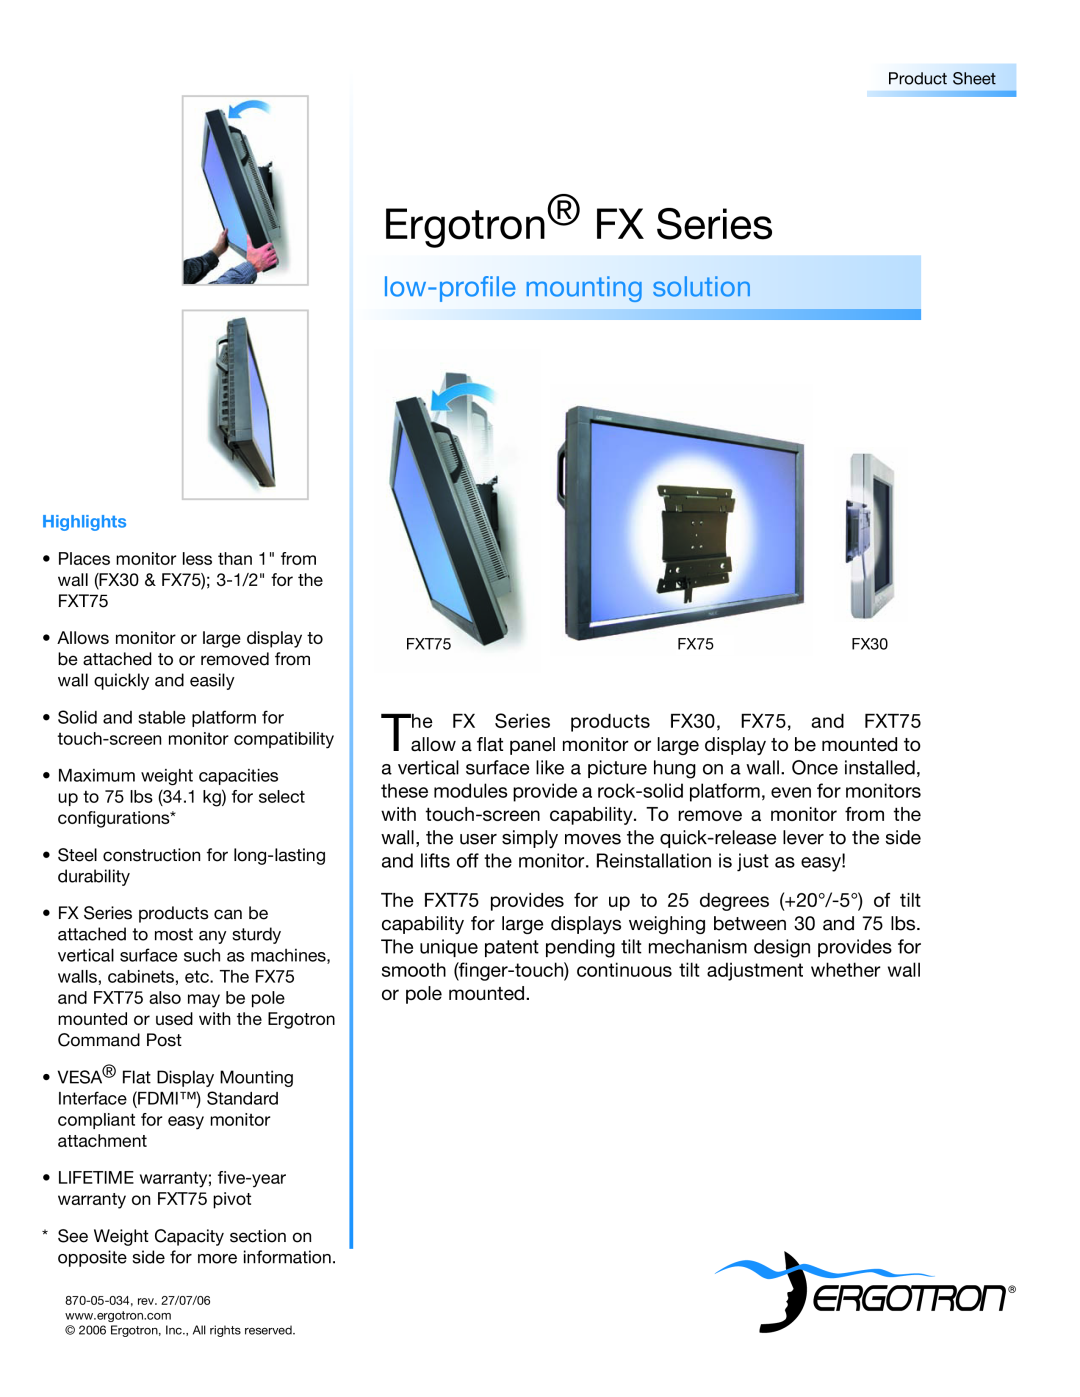 Ergotron FX30, FX75 warranty Ergotron FX Series, low-profilemounting solution 